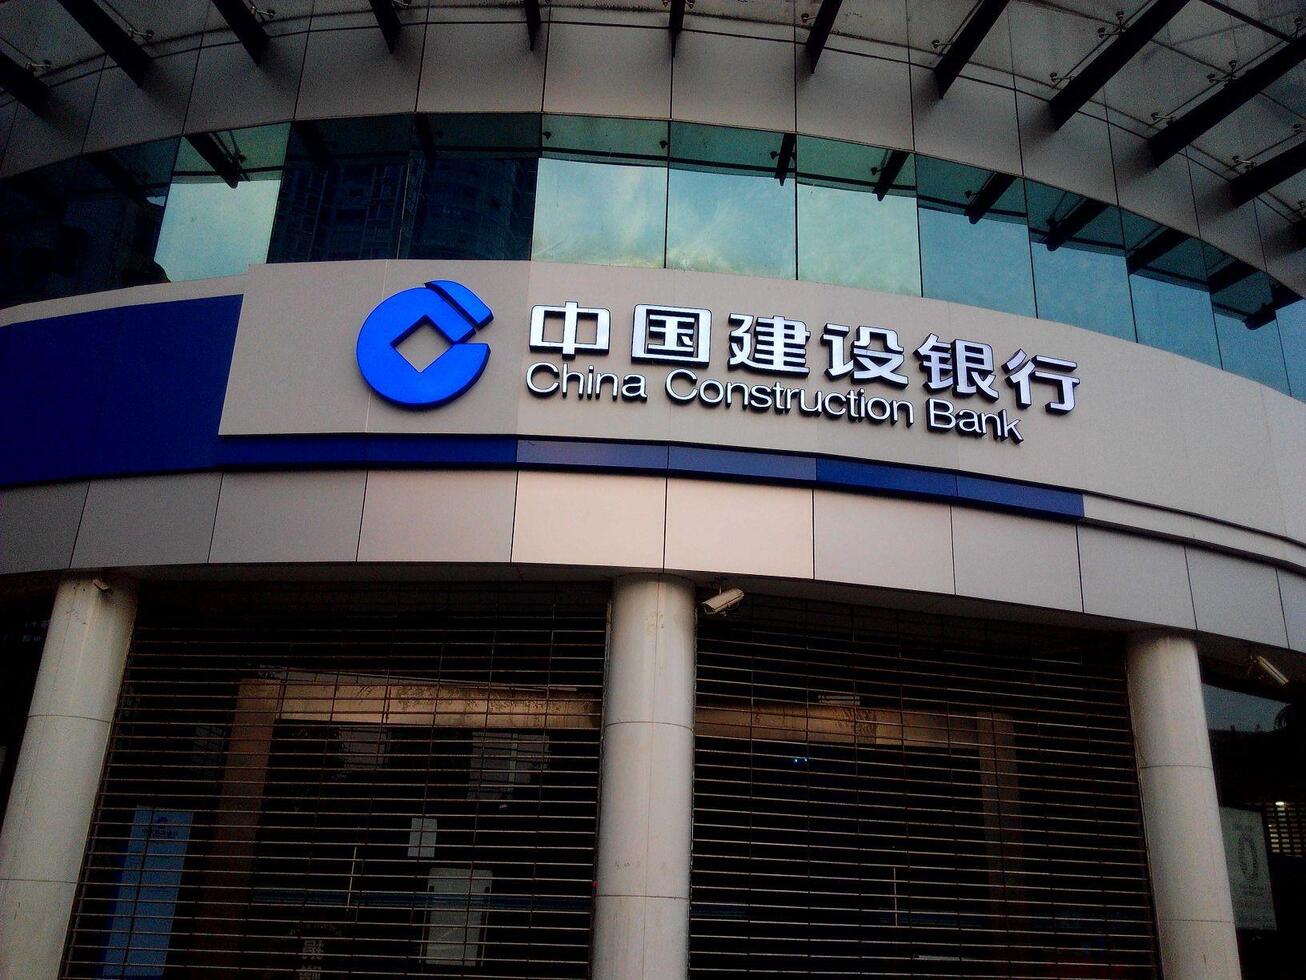 ۱.۵۸ تریلیون یوان؛ تخصیص وام بانک سازه چین